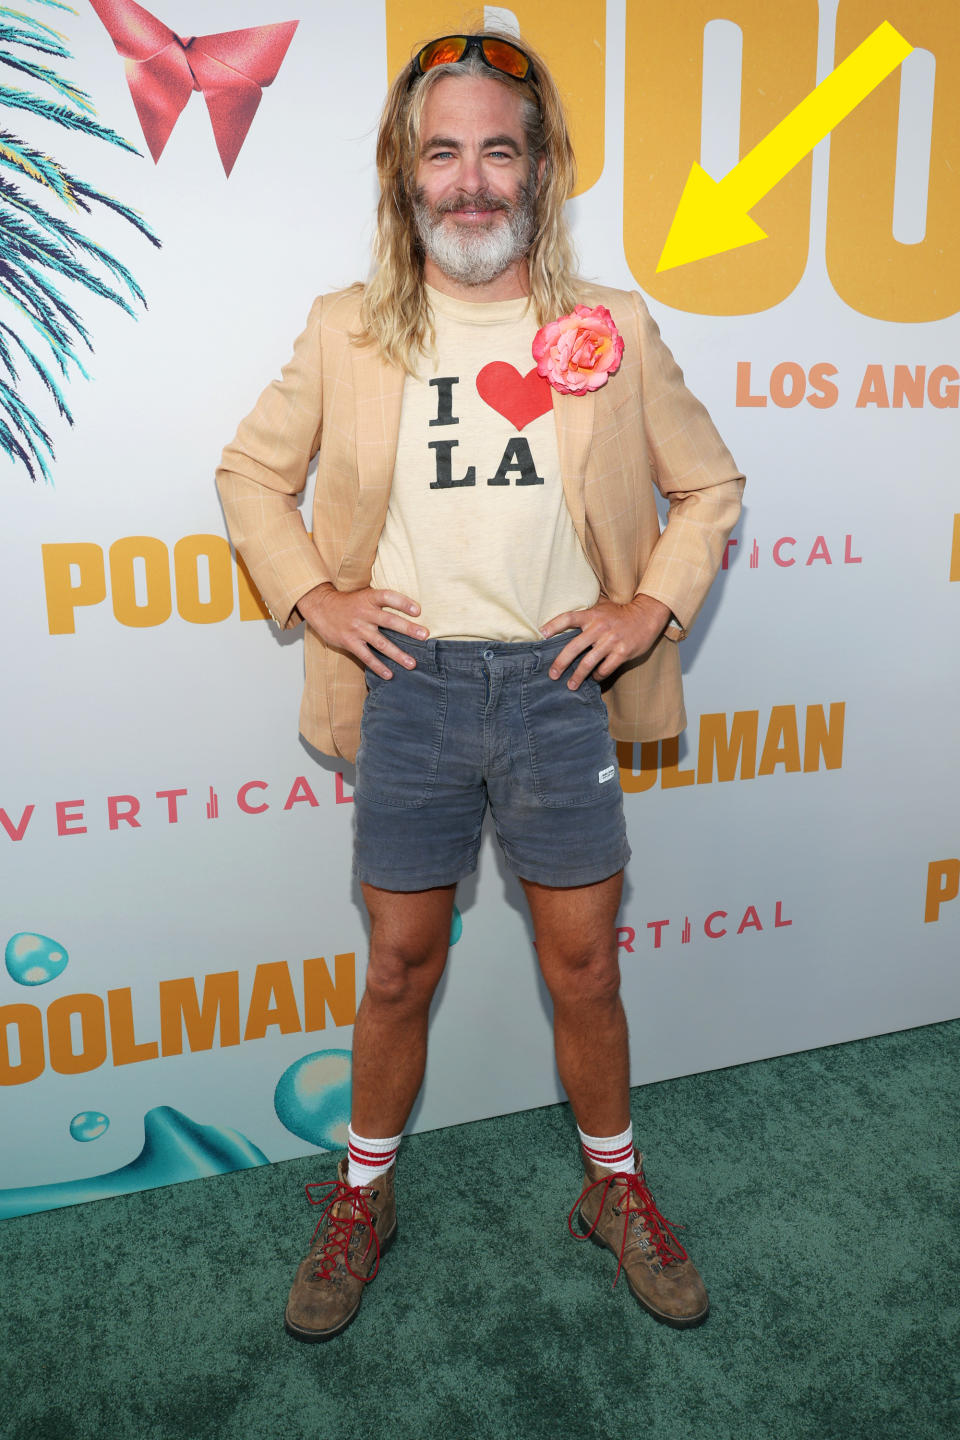 Chris Pine in beige jacket, "I ❤️ LA" shirt, denim shorts, with flower accessory at movie premiere